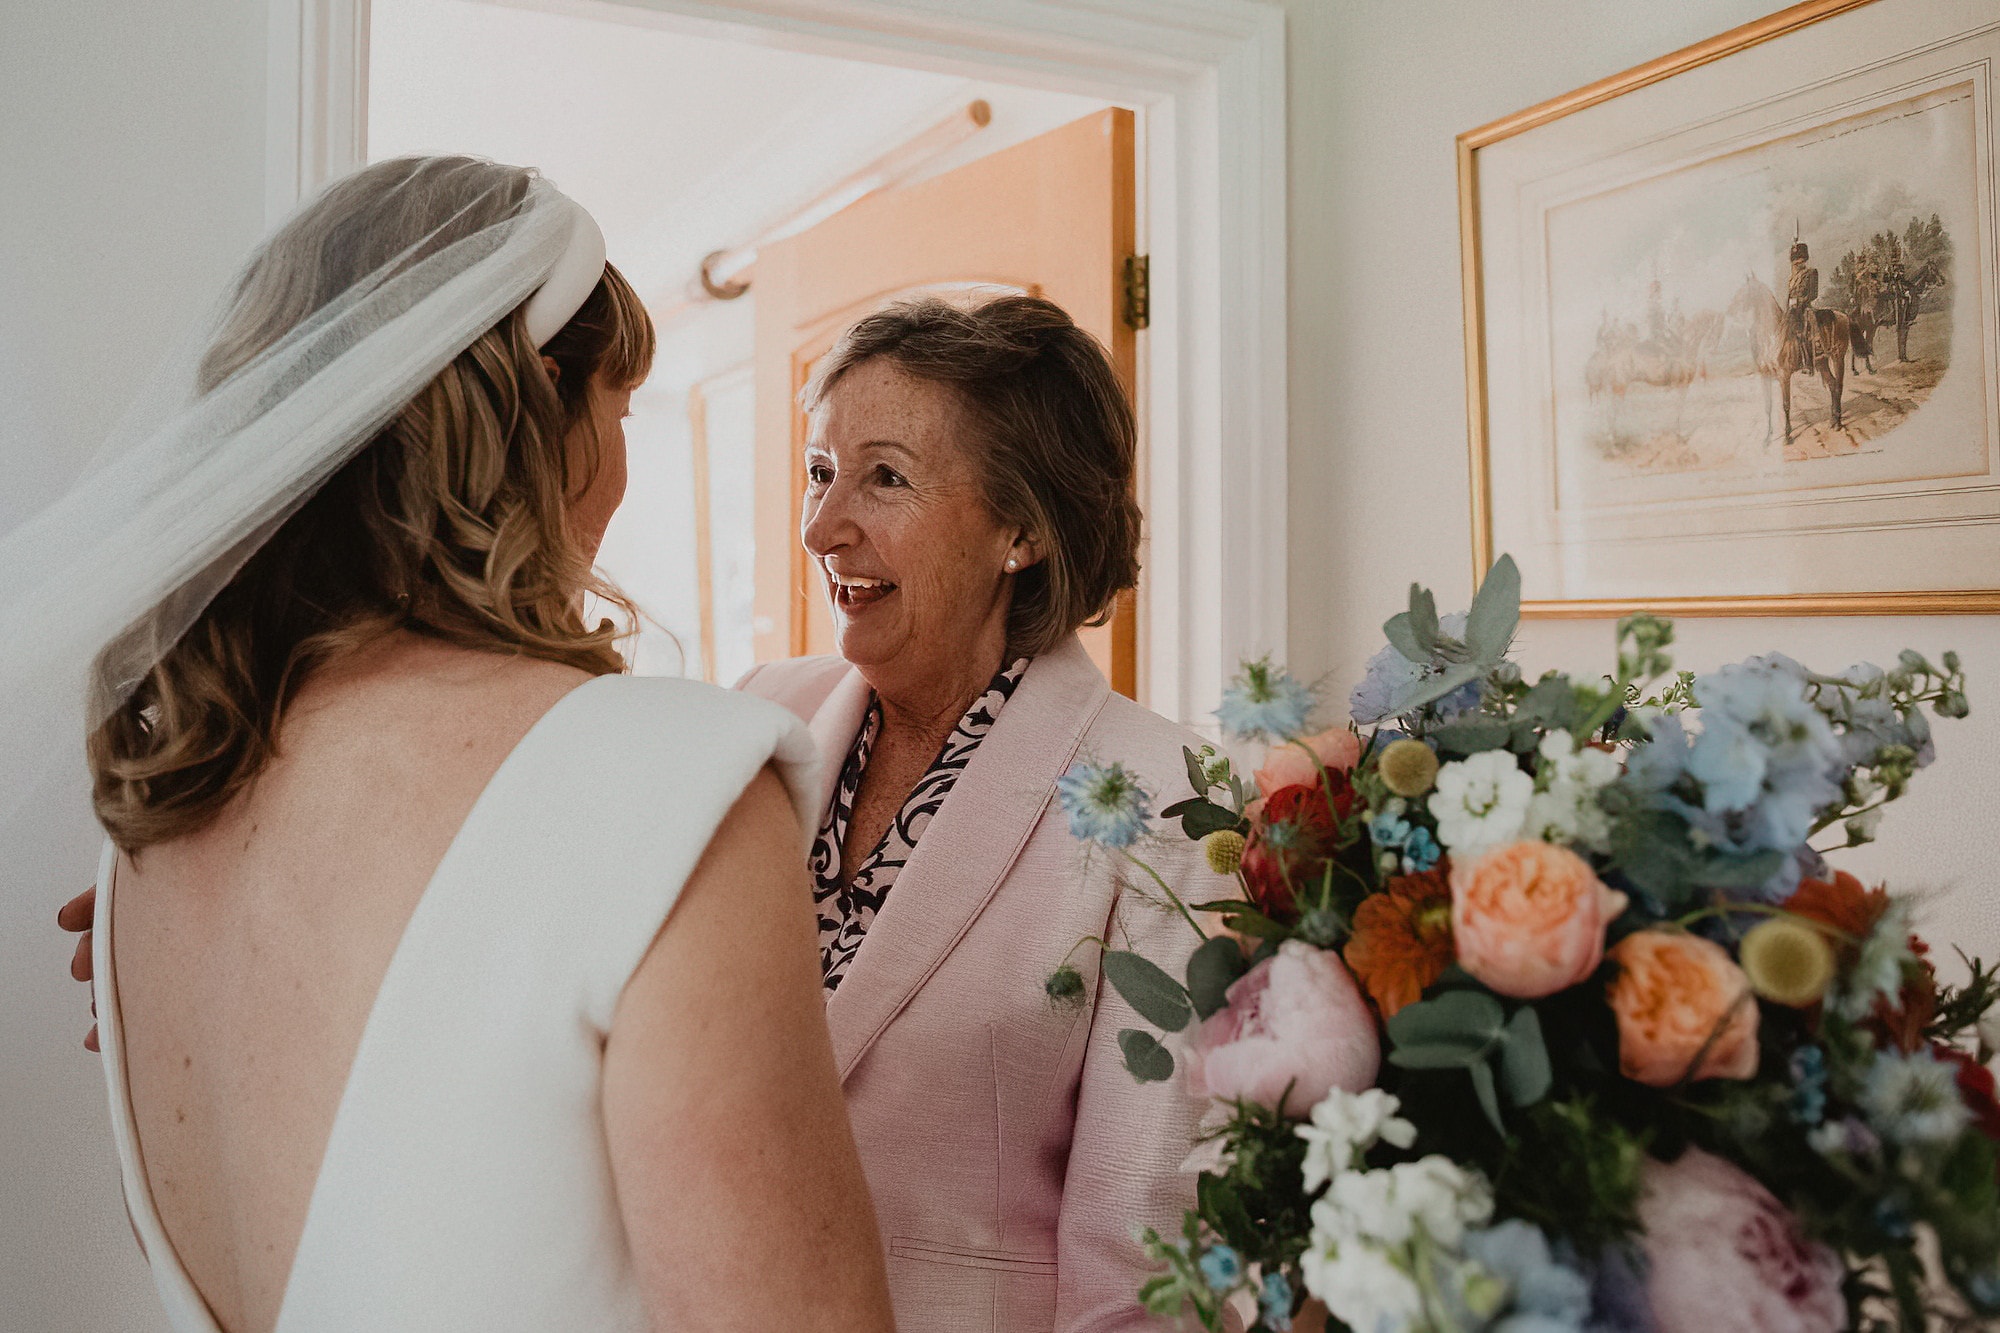 brides mum feeling emotional at seeing her daughter in wedding dress